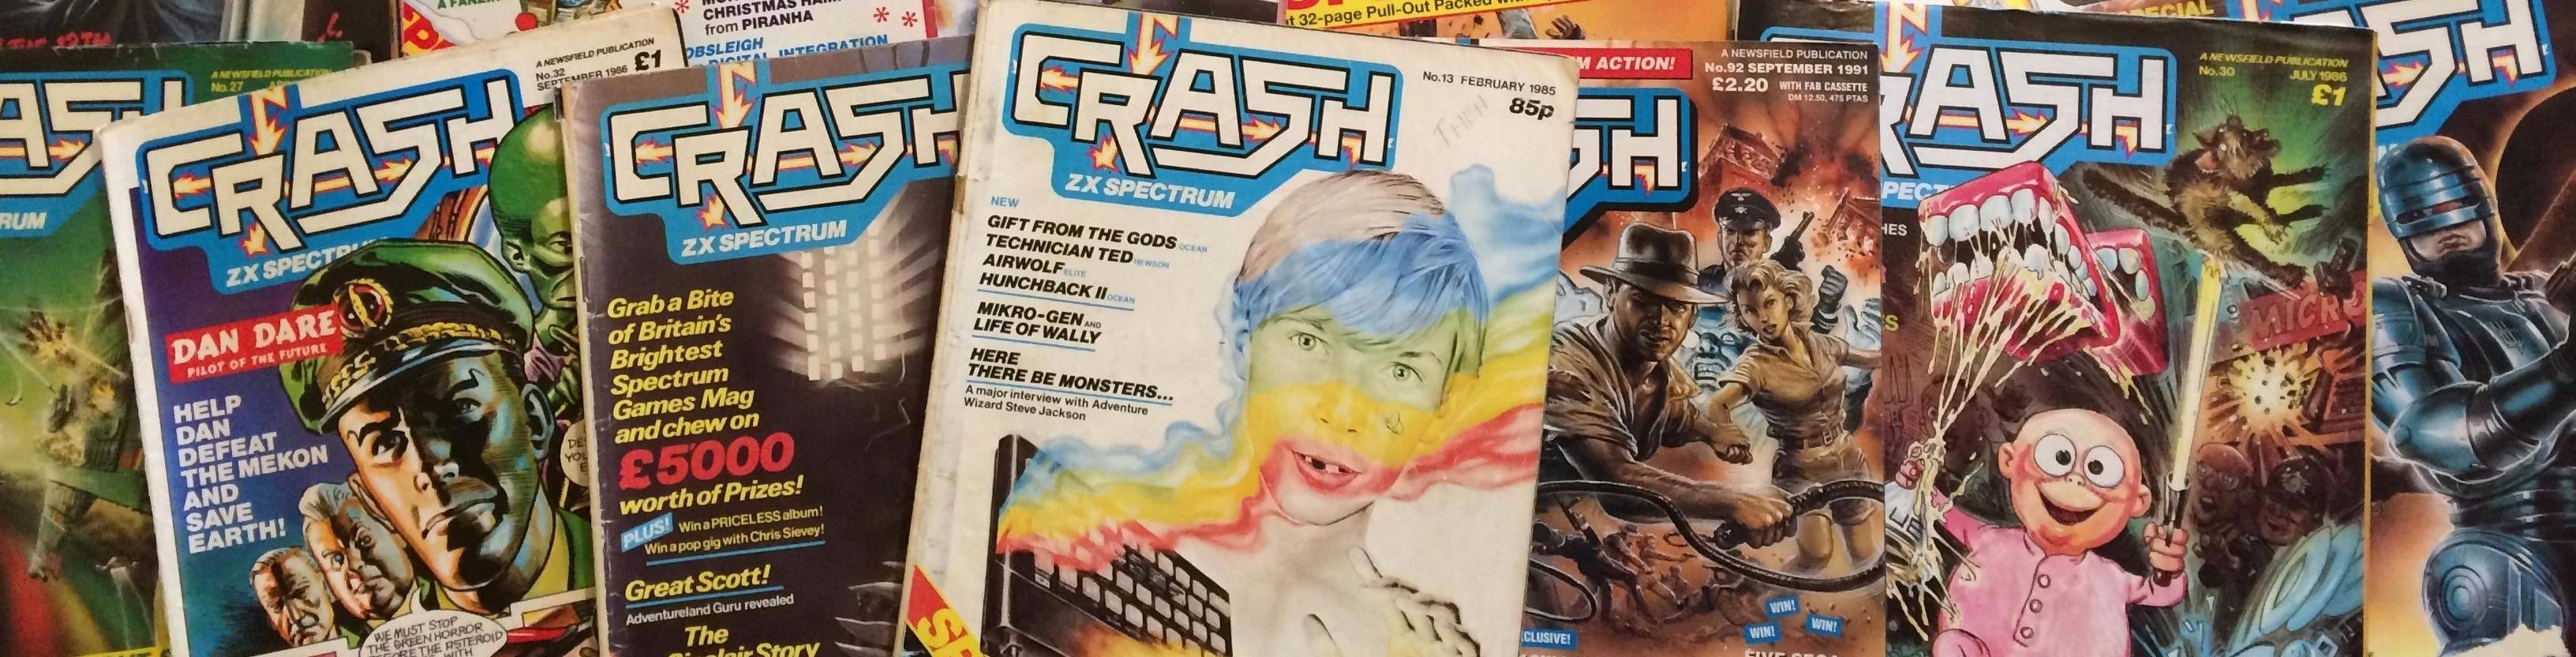 Image for The story of Crash magazine